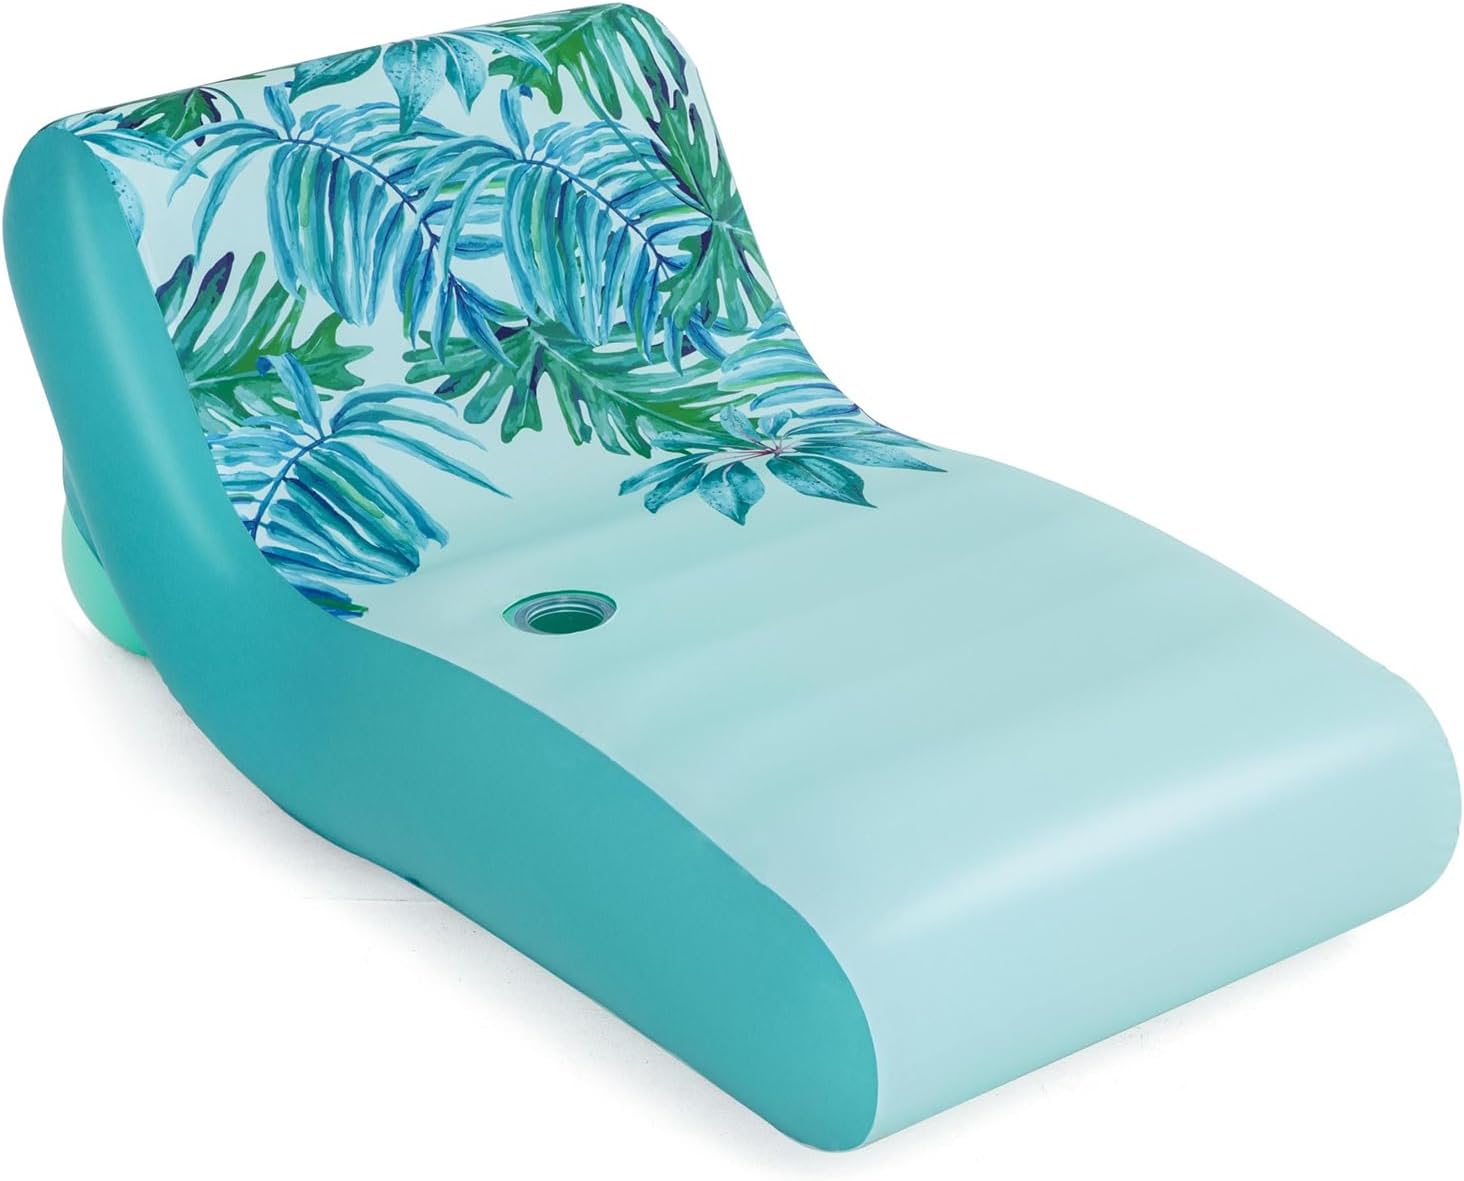 H2O GO Luxury Fabric Inflatable Pool Lounge (69 x 42)